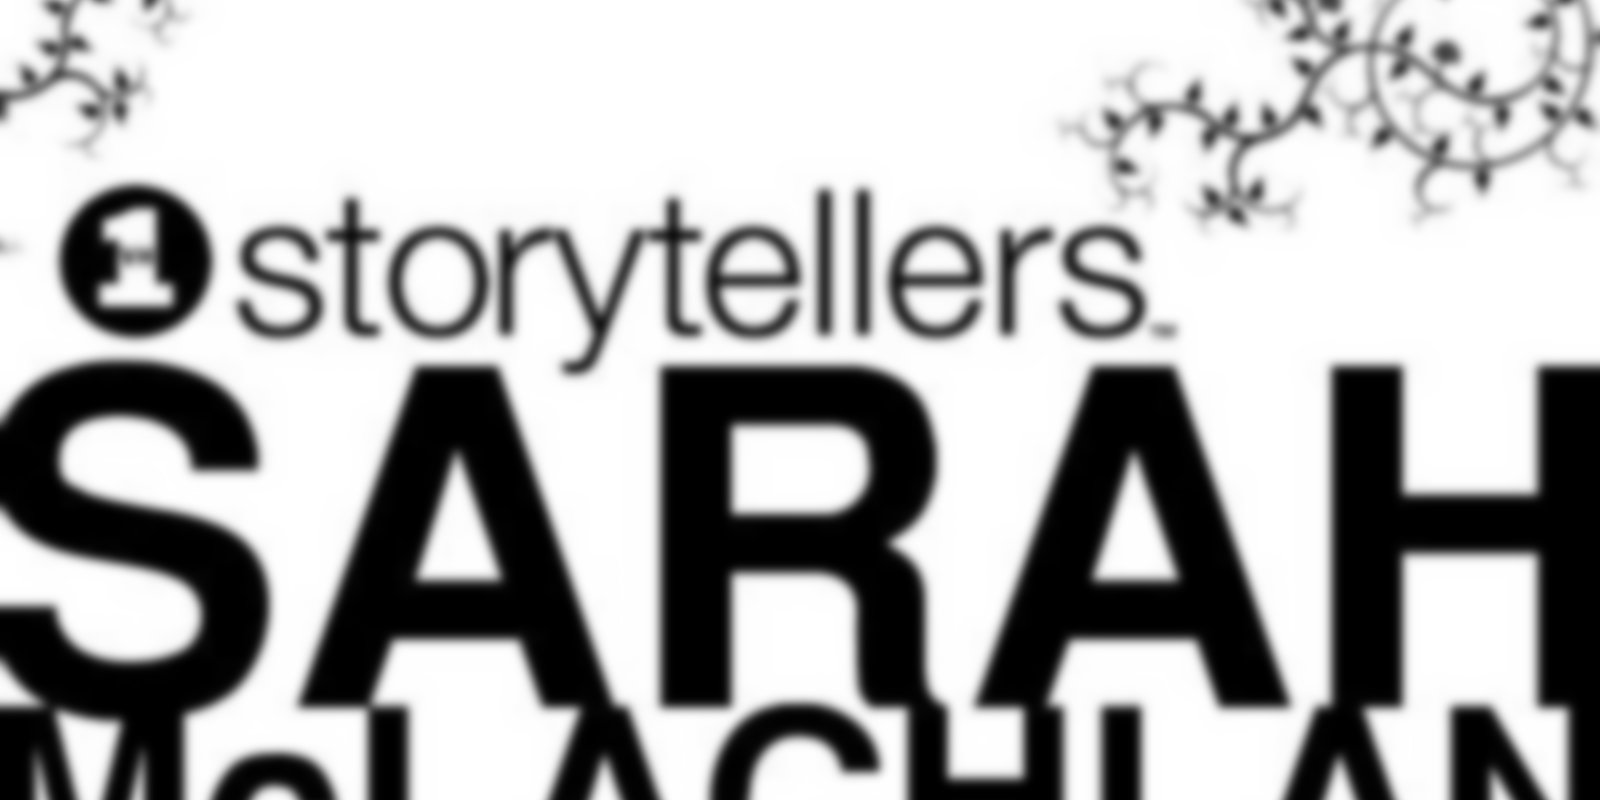 VH-1 Storytellers - Sarah McLachlan